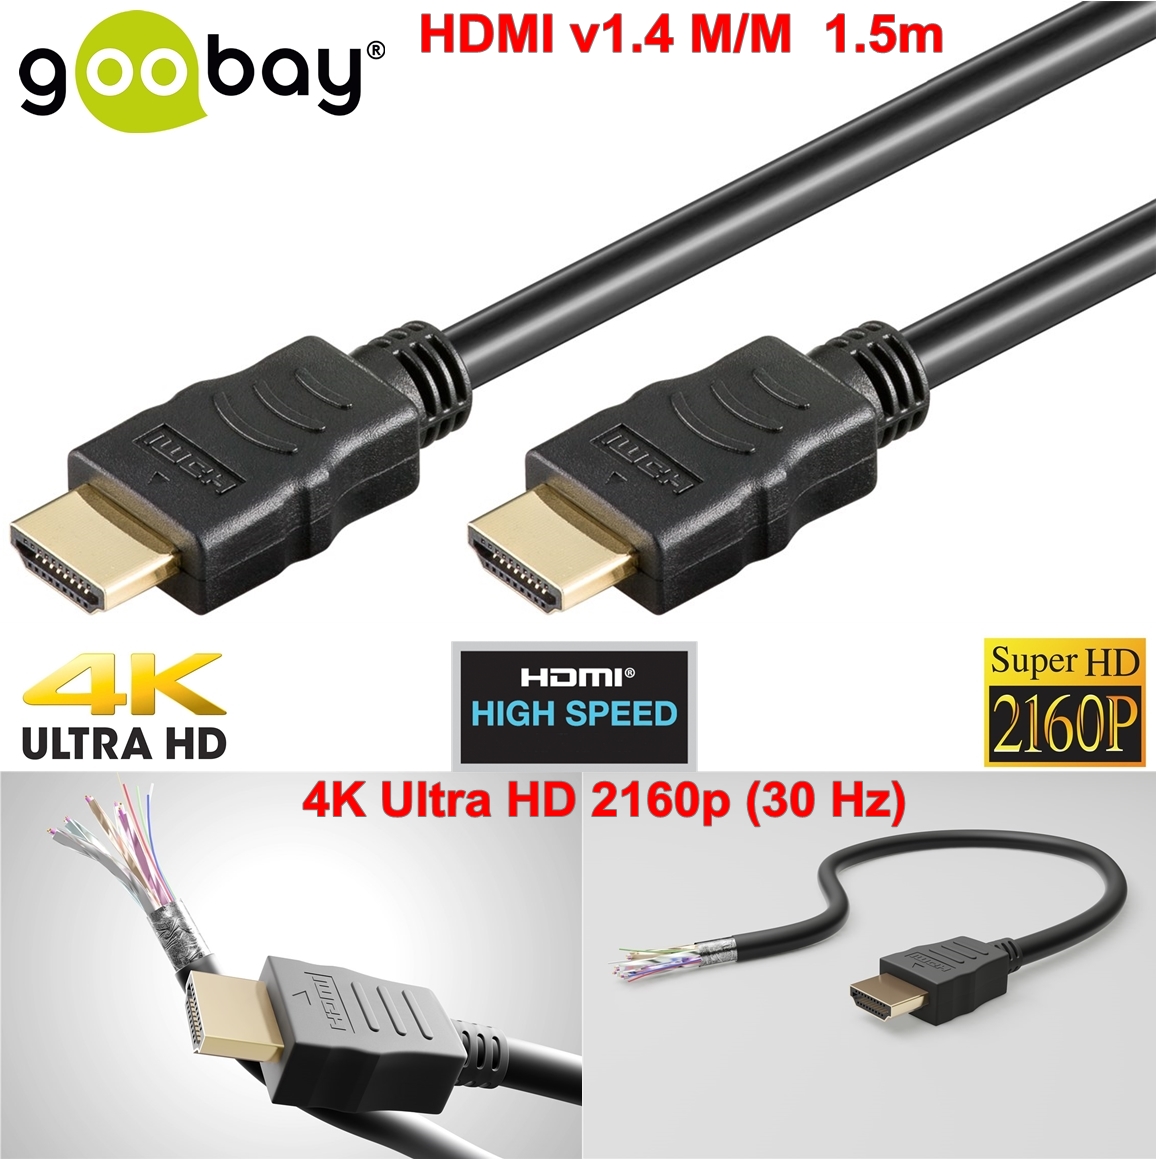 HDMI v1.4 M/M  1.5m (30 Hz/2160p) GOOBAY 60610